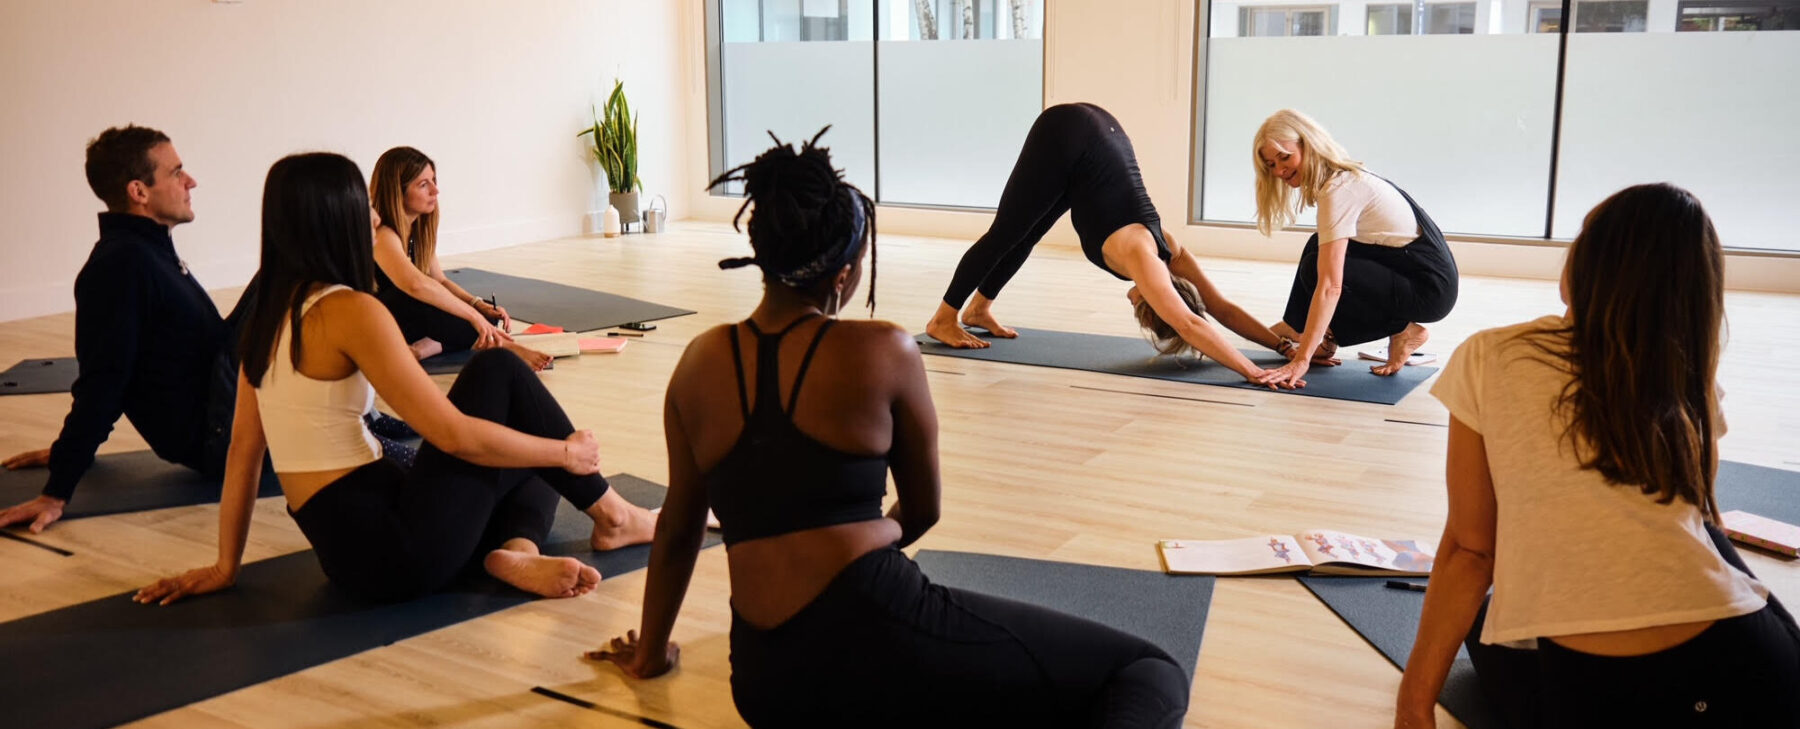 The Best Yoga Teacher Training in London